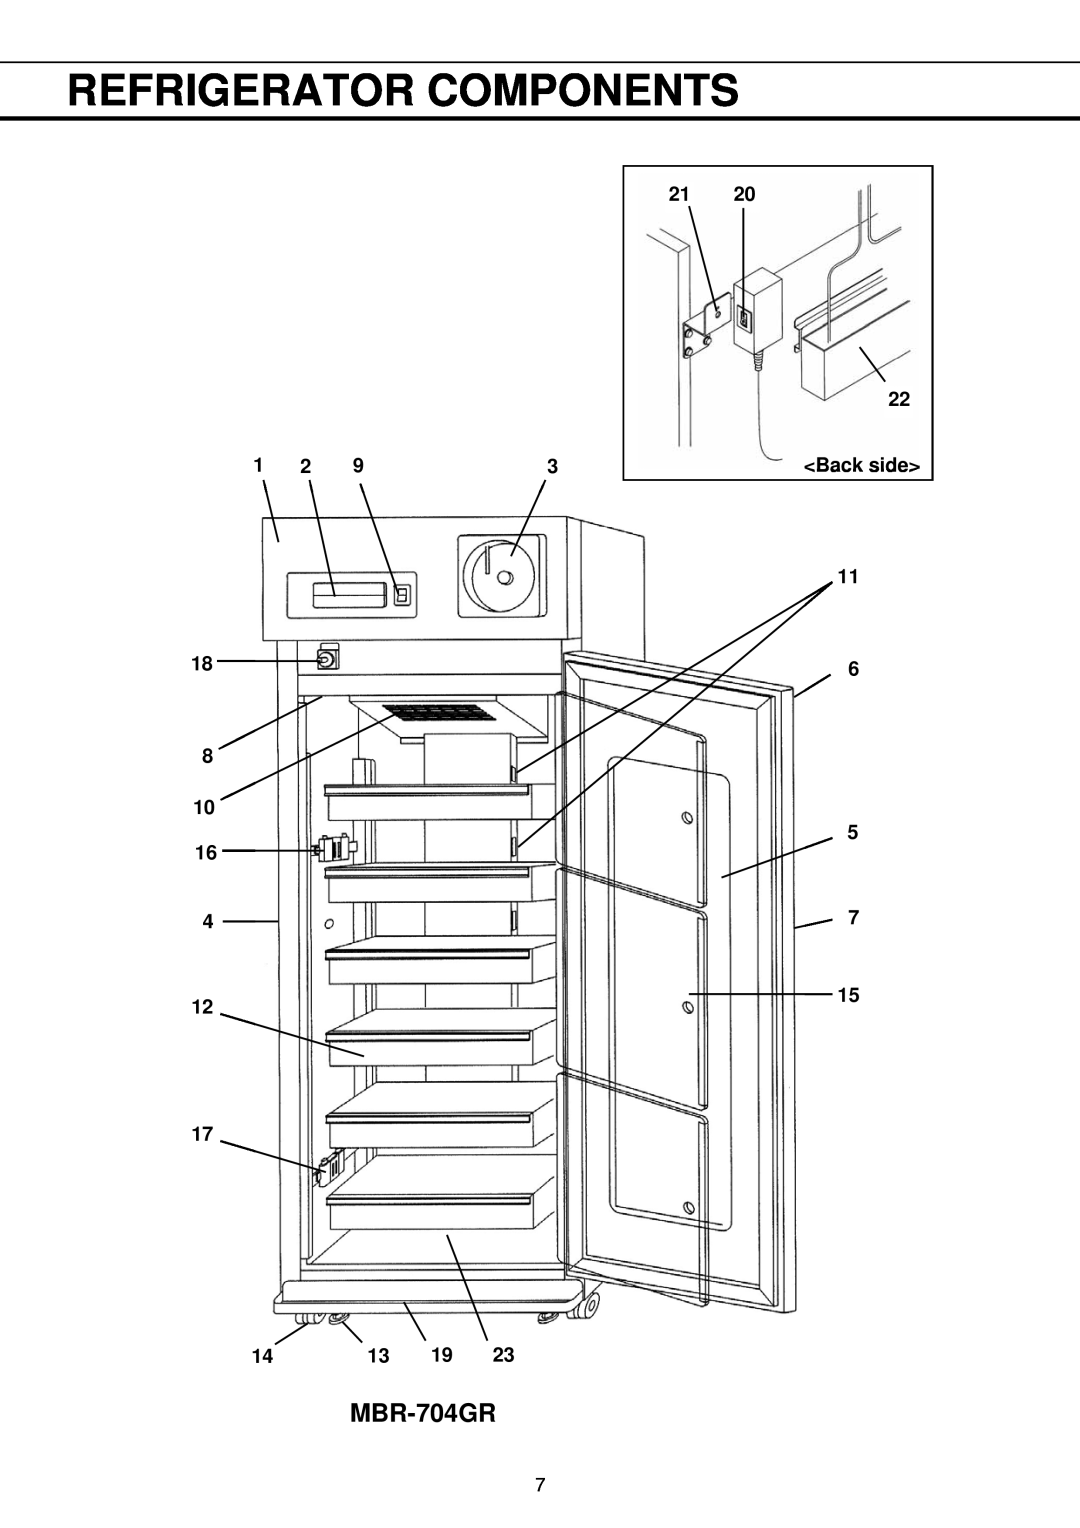 Sanyo instruction manual Refrigerator Components, MBR-704GR, 18 8 10 16 4 12 17 14 13 19, 21 22 <Back side> 11 6 5 7 15 